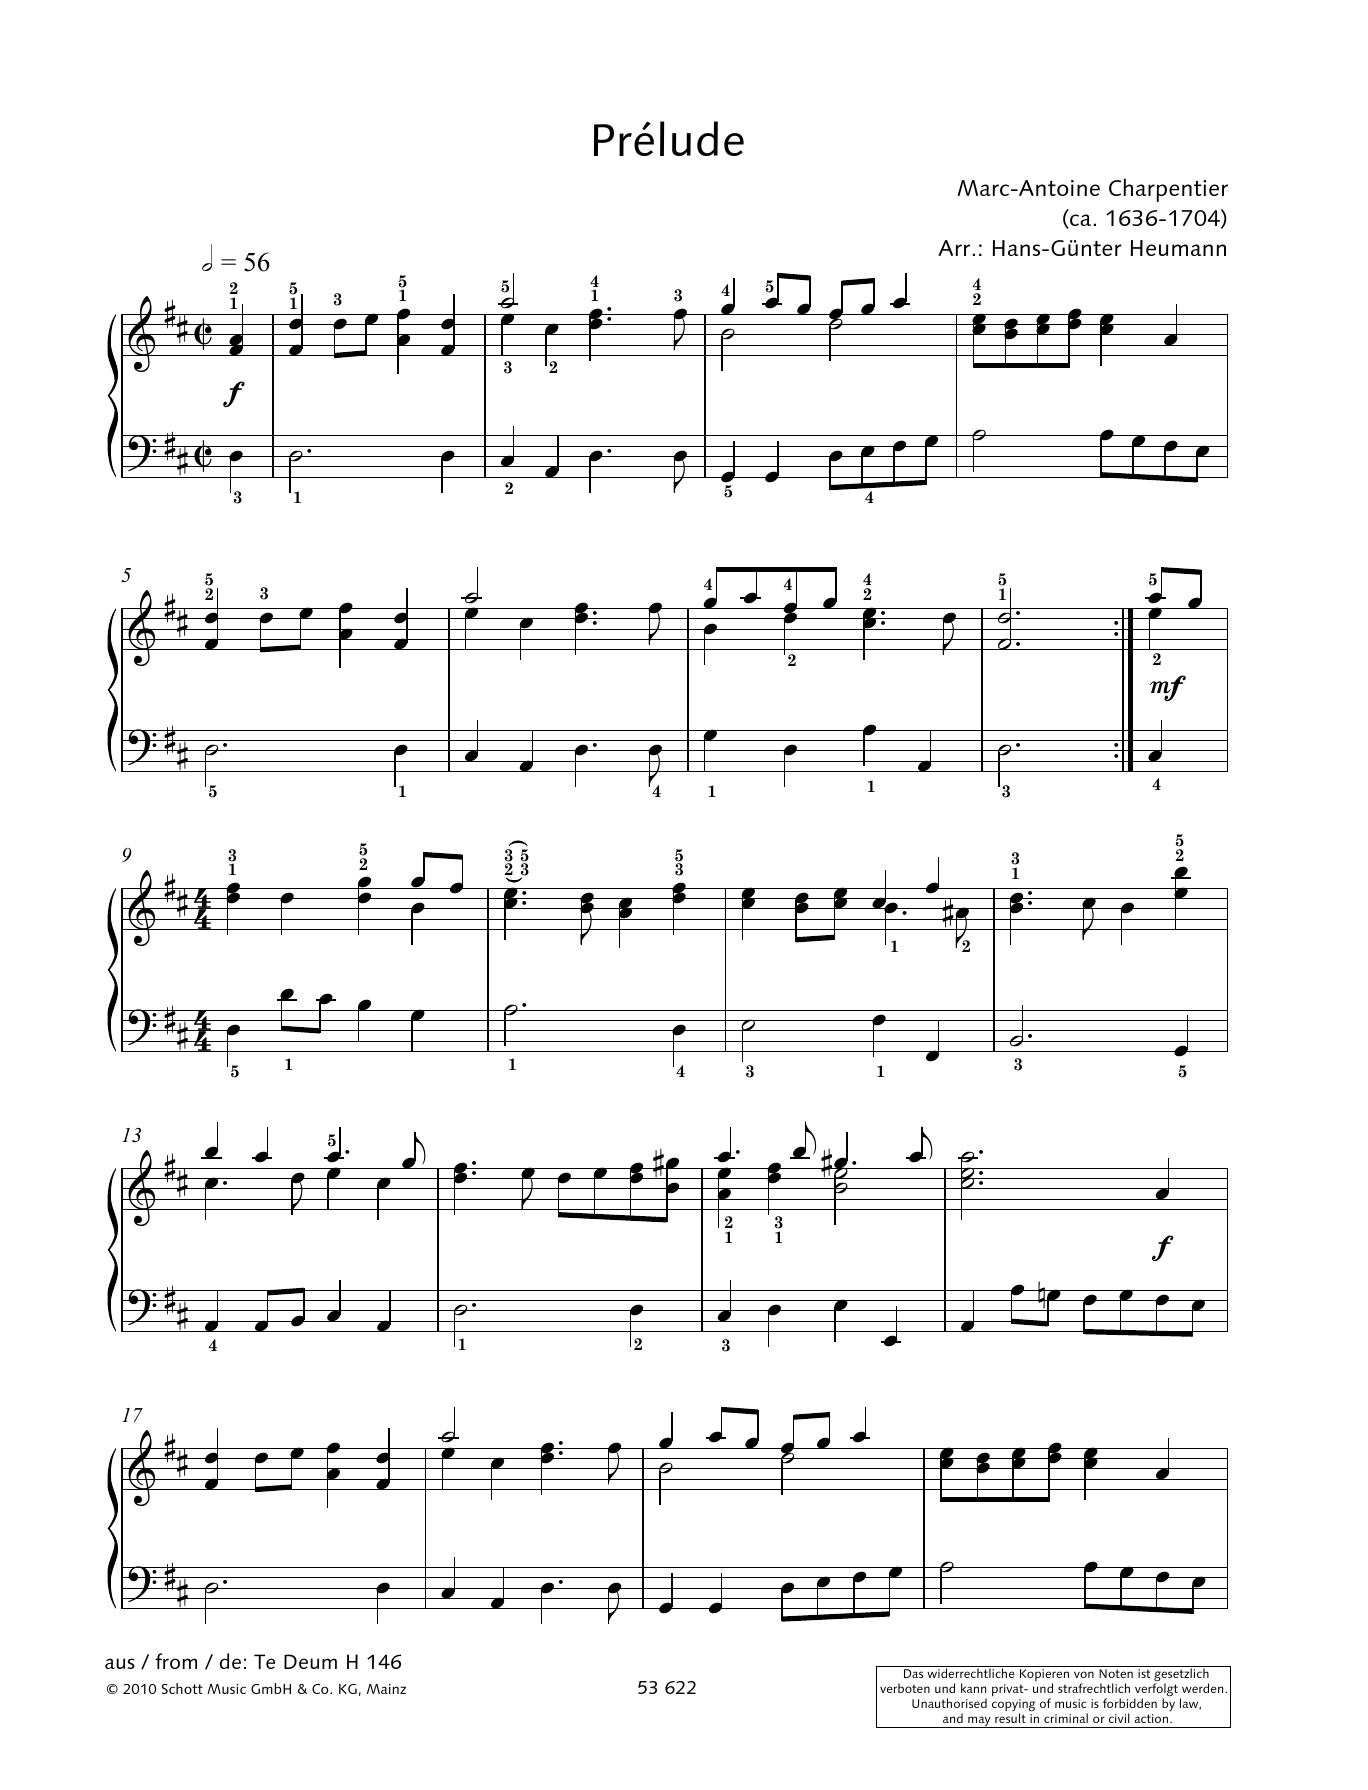 Hans-Gunter Heumann Prélude Sheet Music Notes & Chords for Piano Solo - Download or Print PDF